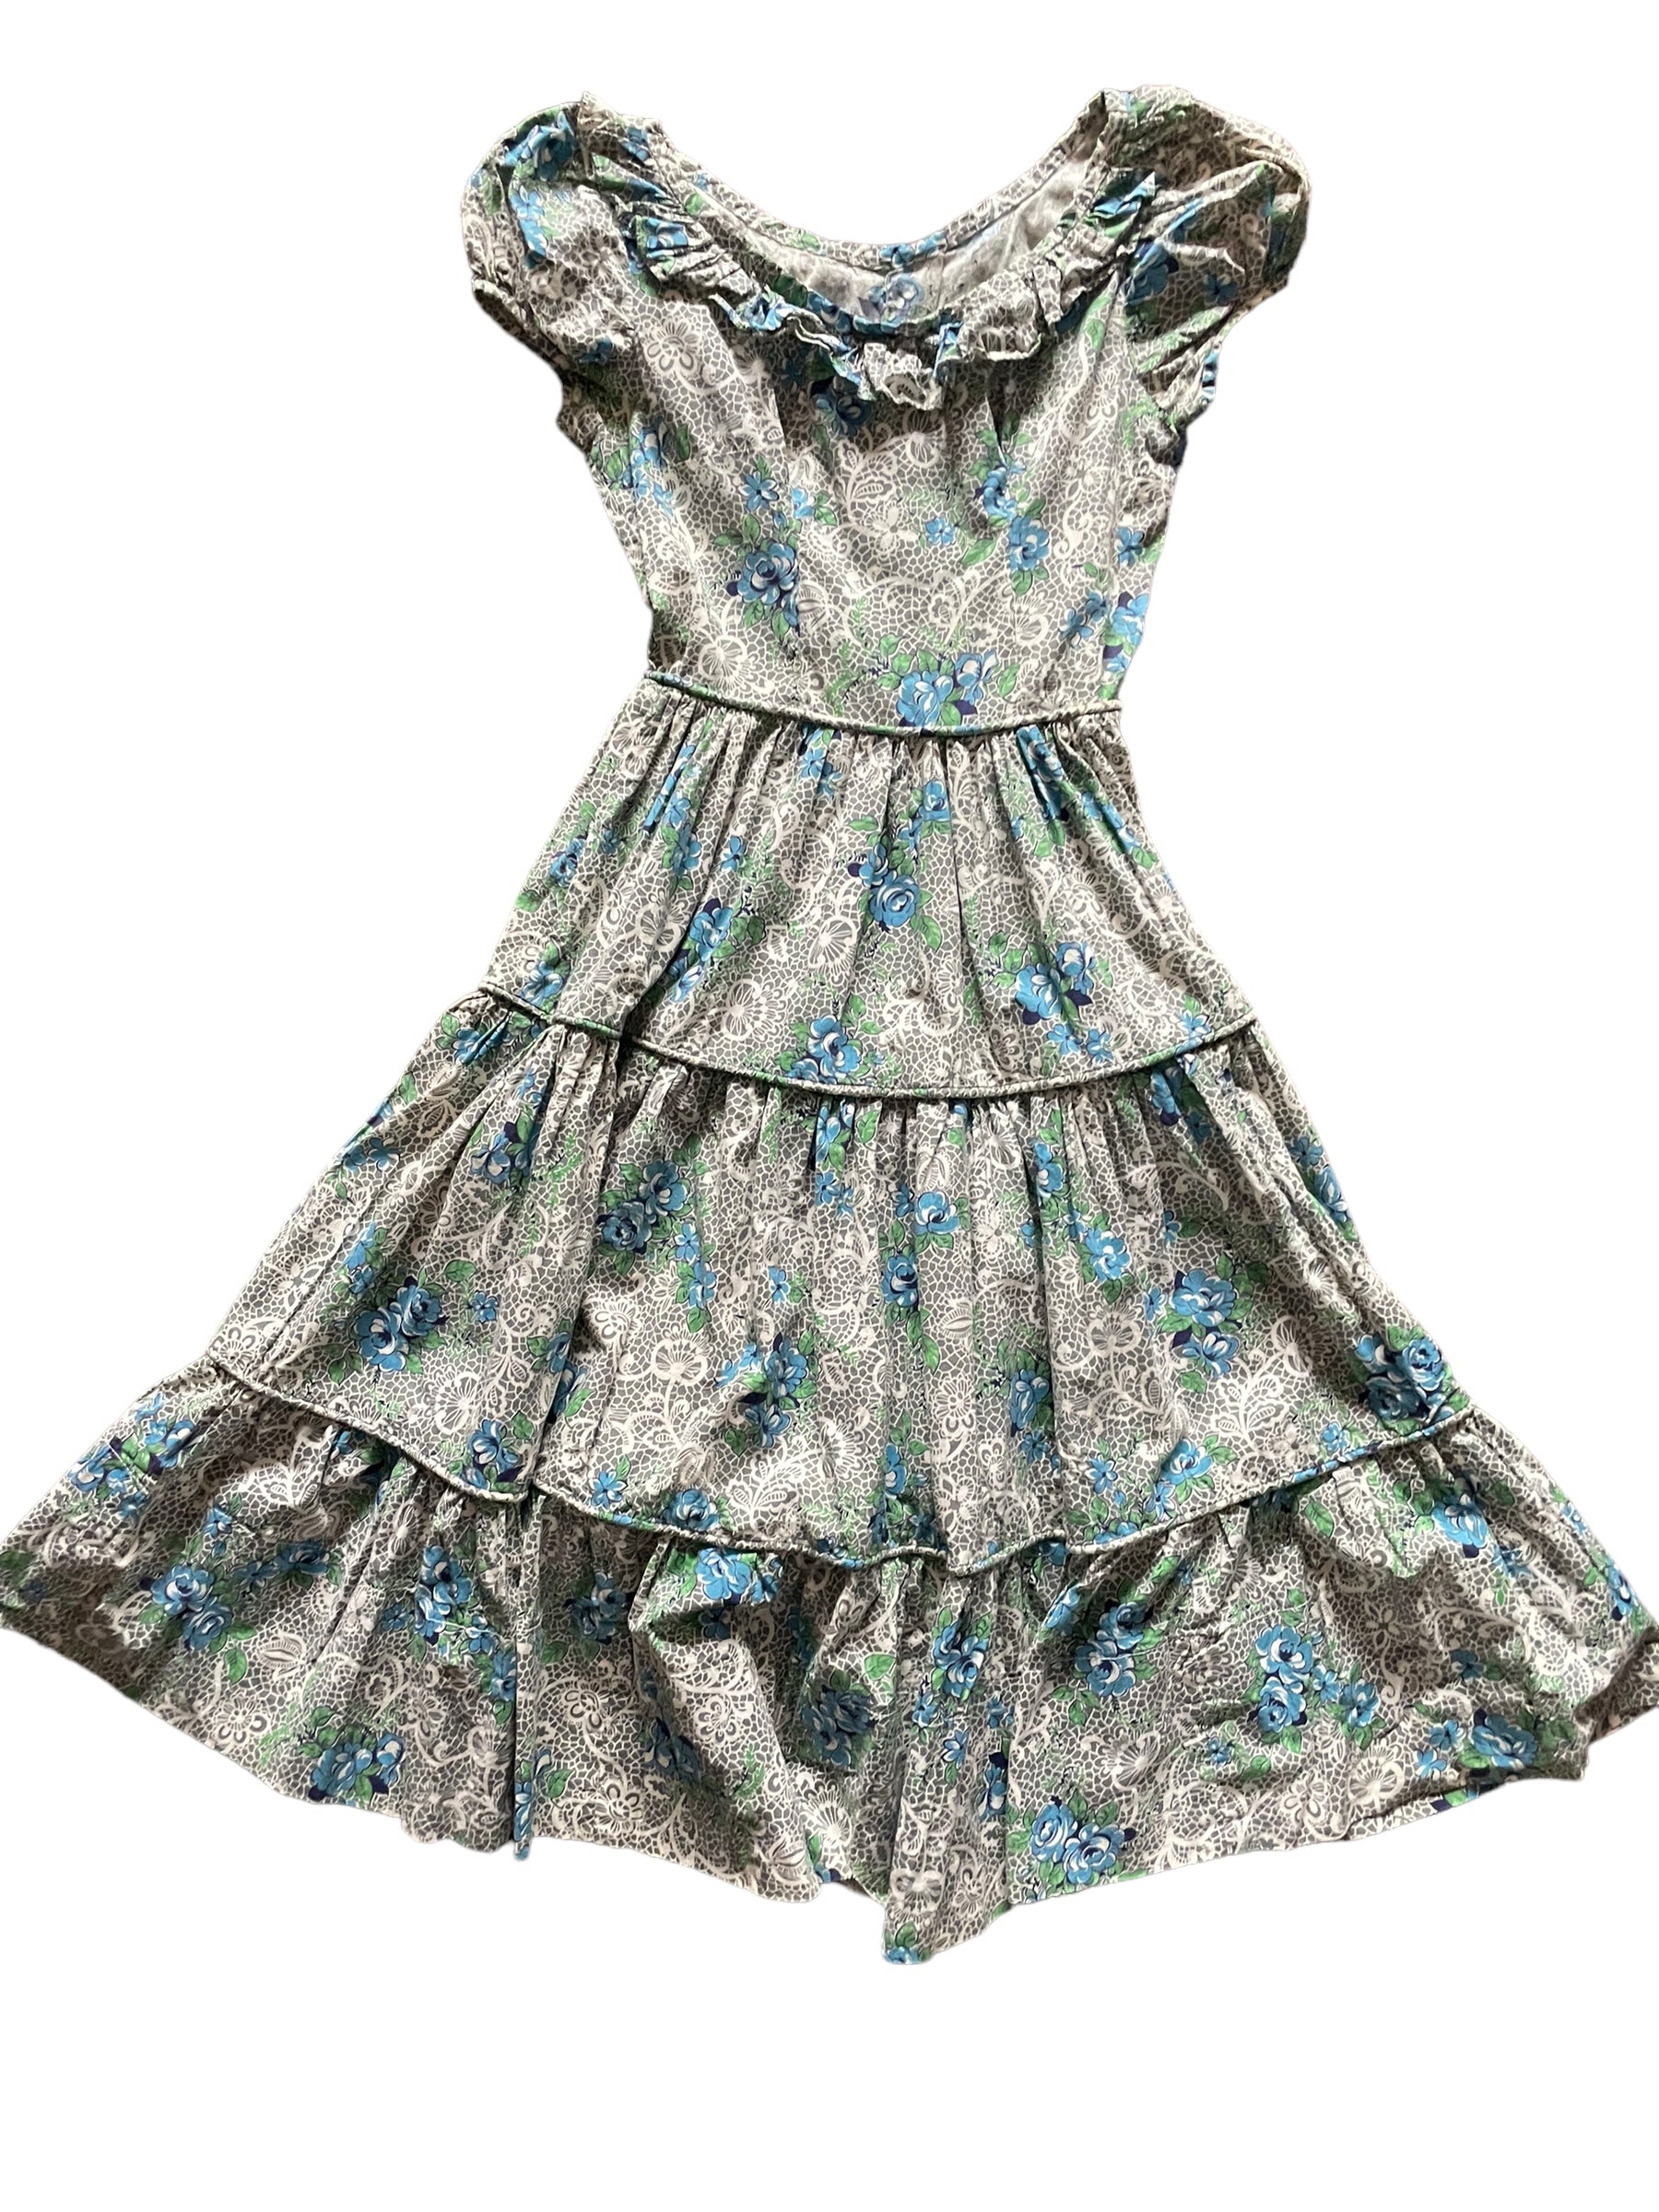 Full front view of Vintage 1950s Floral Western Swing Dress SZ XS |  Barn Owl Vintage Dresses | Seattle Vintage Ladies Clothing